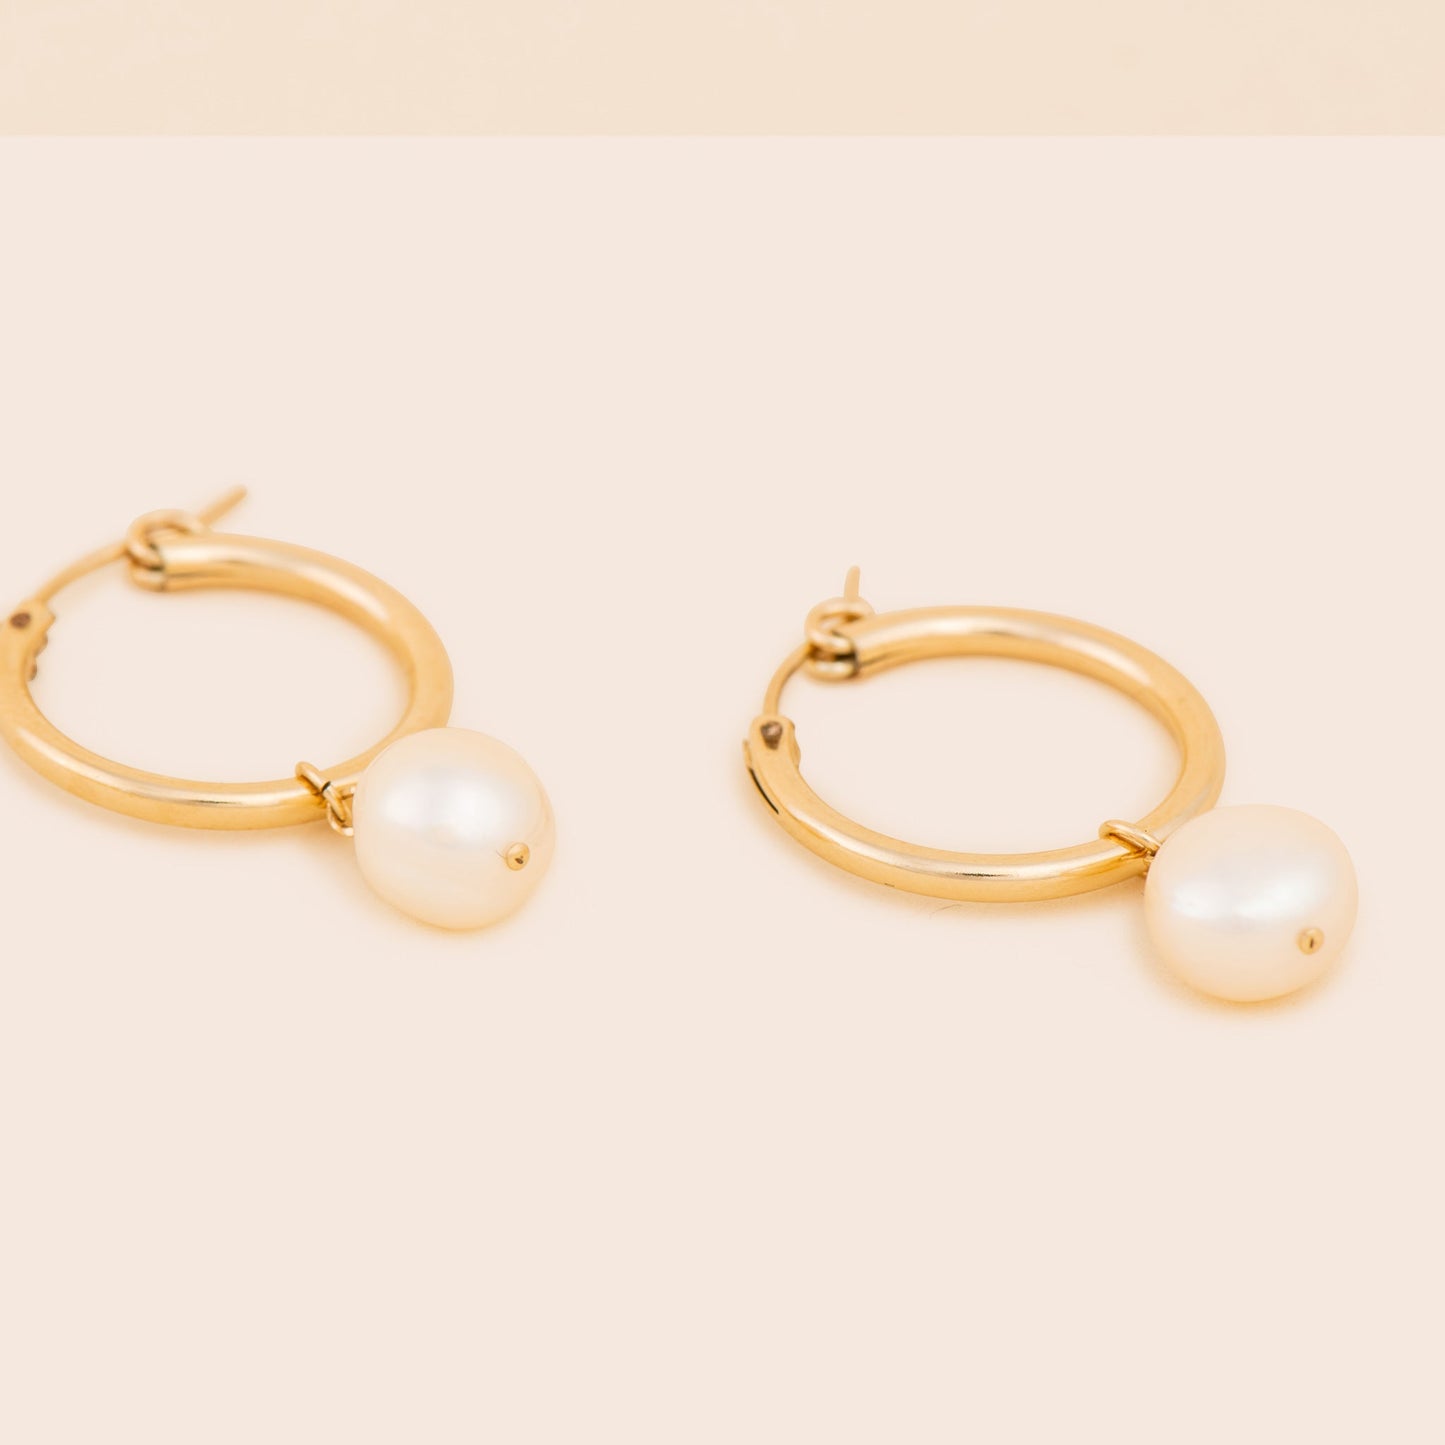 Large Pearl Dangle Gold Earrings - Gemlet